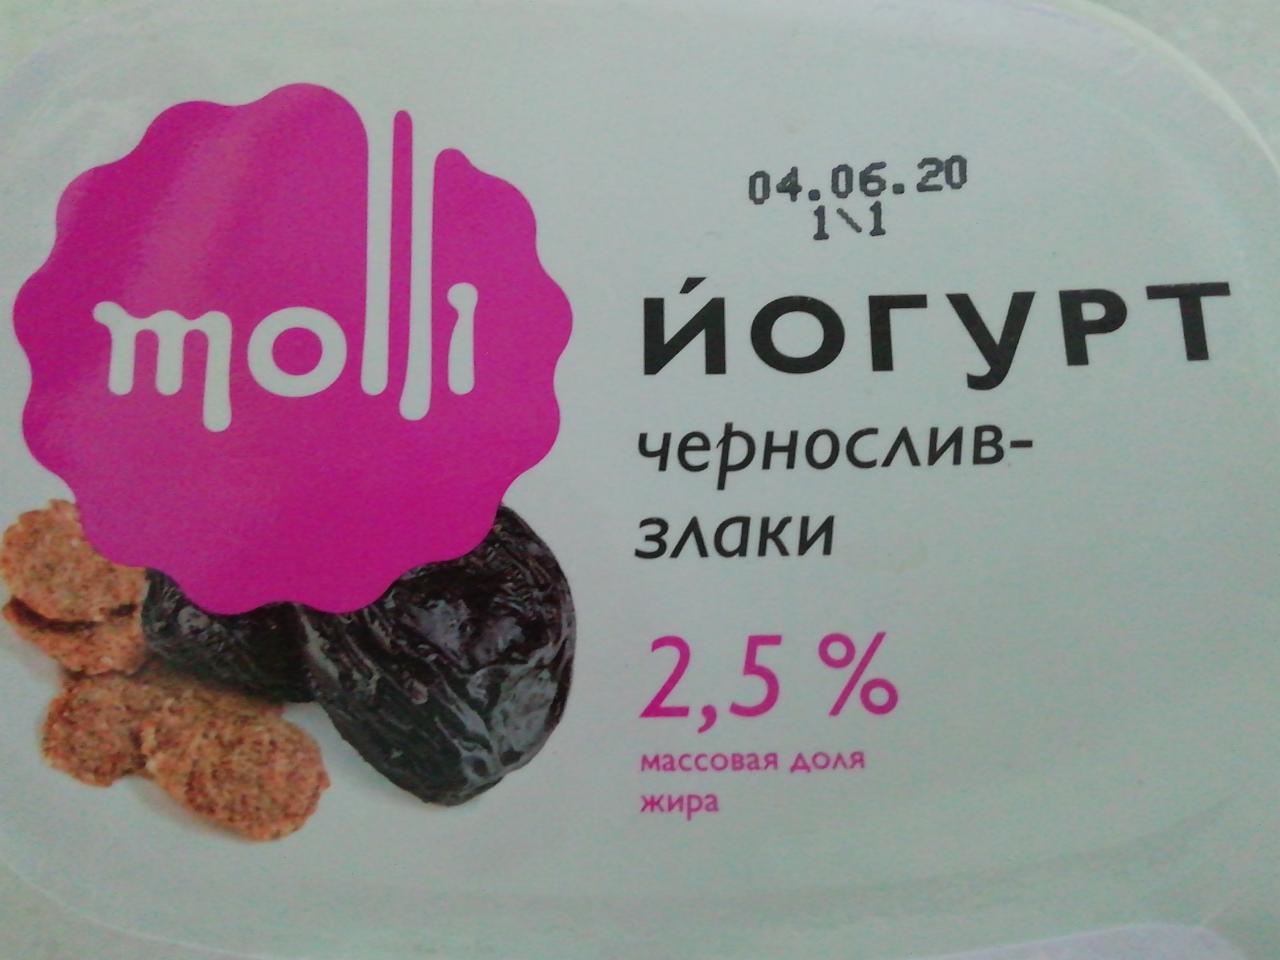 Фото - йогурт molli 2,5% чернослив-злаки